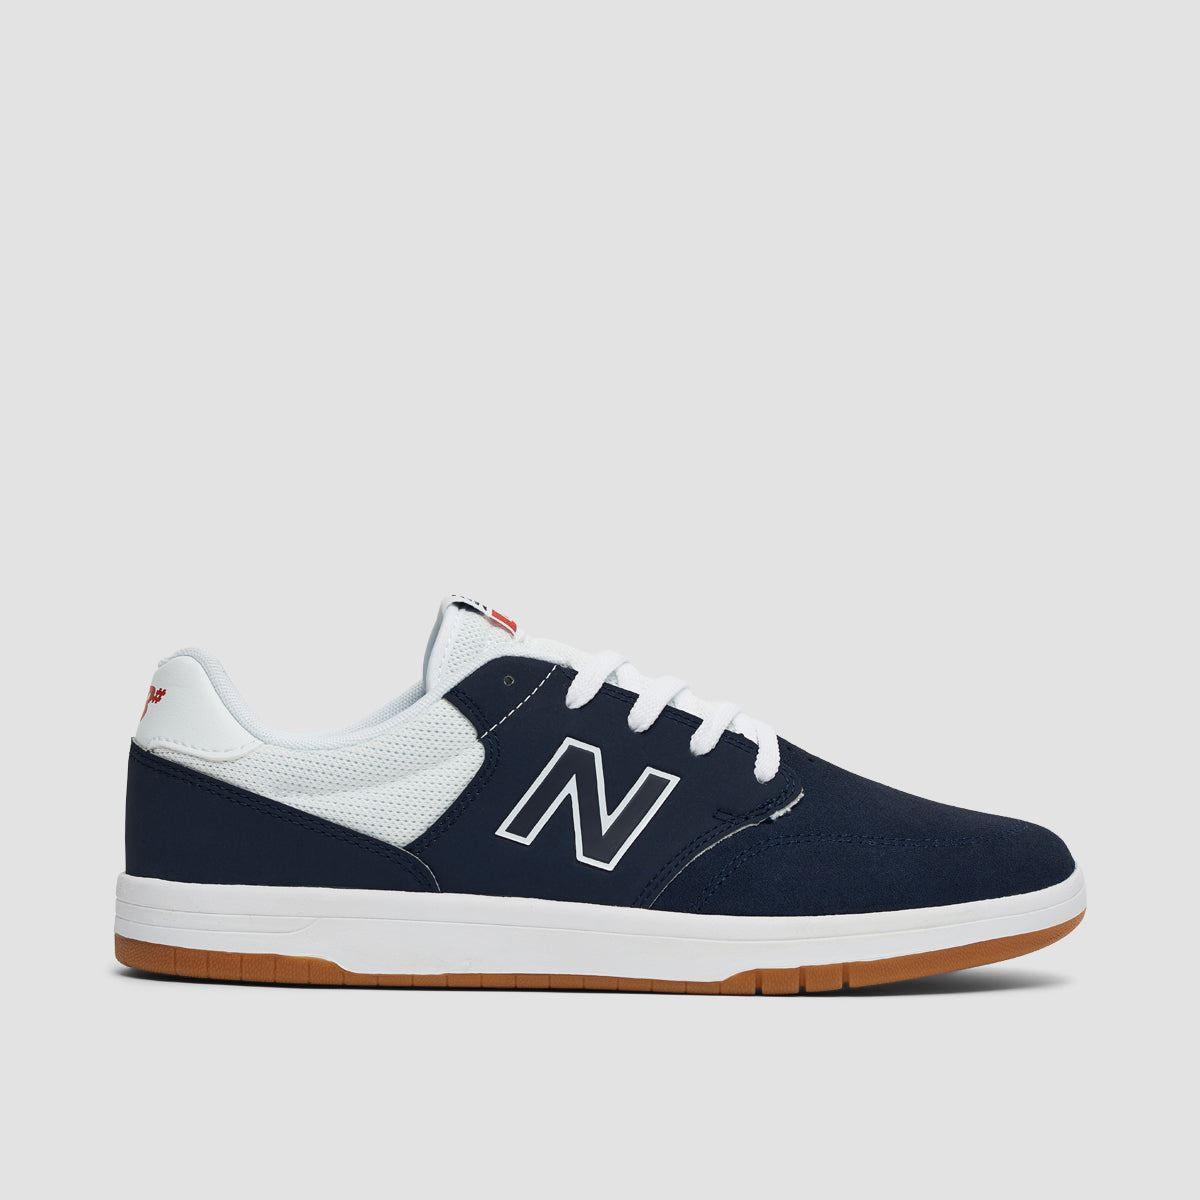 New Balance Numeric 425 V1 Shoes - Navy/White